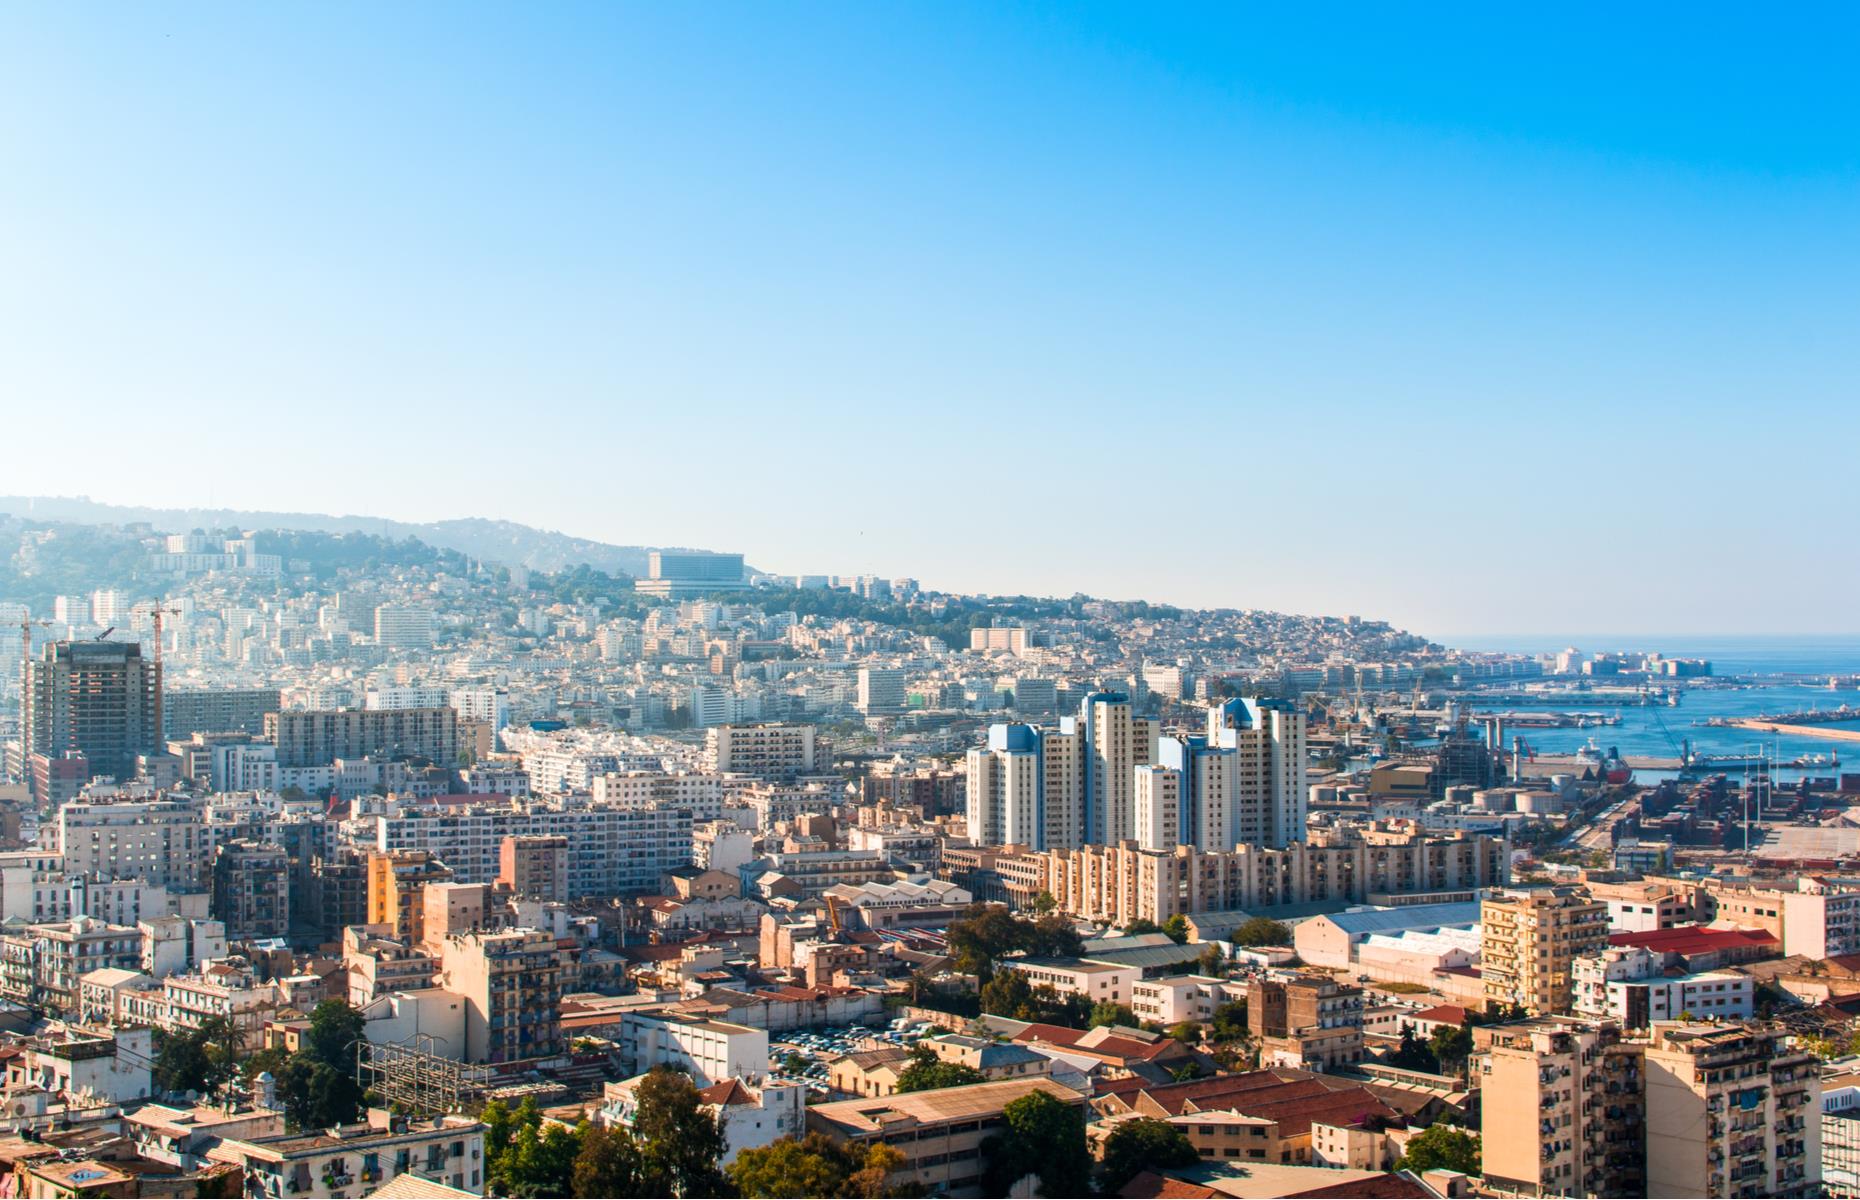 = 6th cheapest: Algiers, Algeria